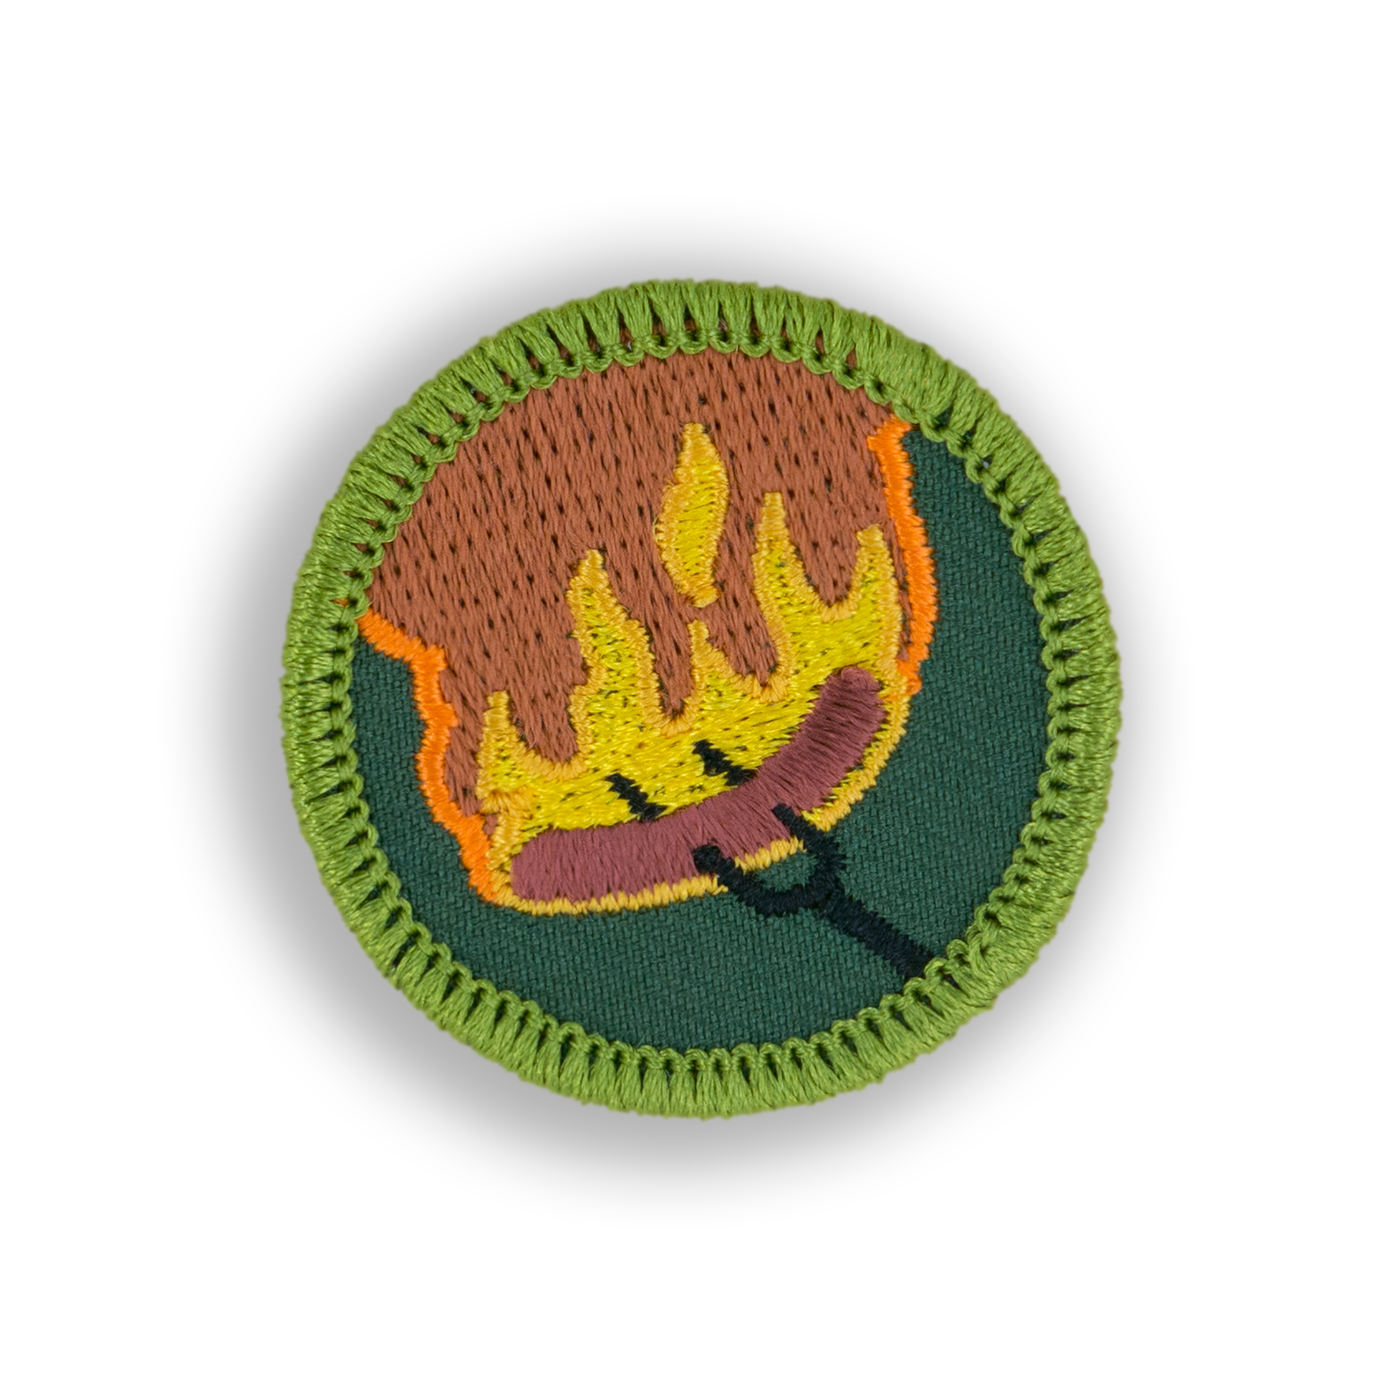 Burning Hot Dog Patch | Demerit Wear - Fake Merit Badges